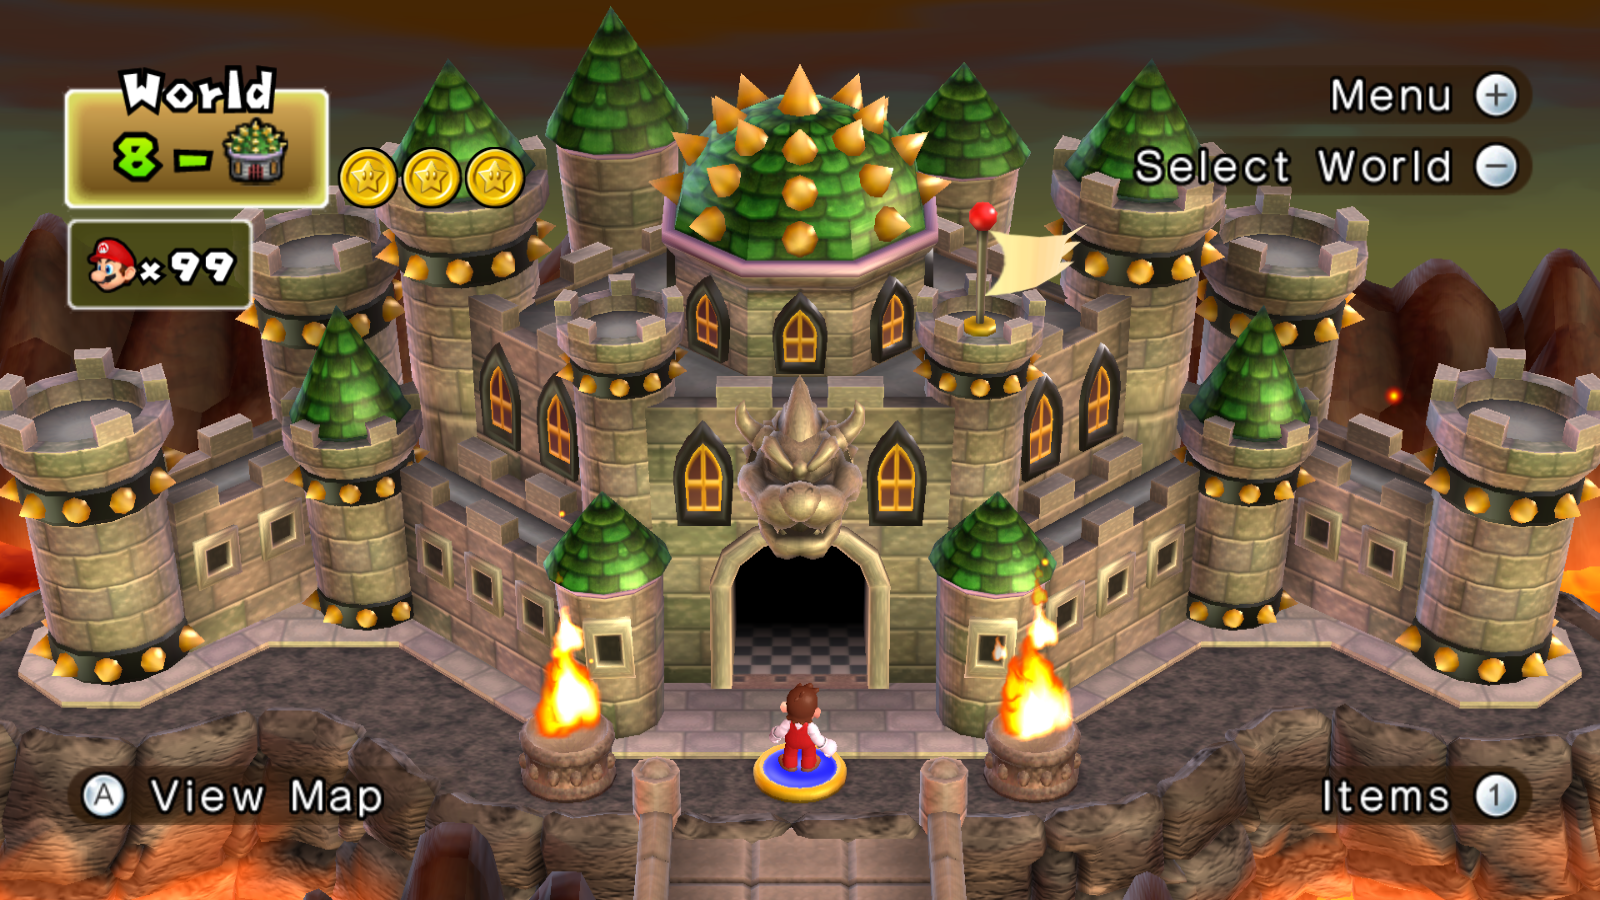 How to Reach Castle Bowser in Super Mario Bros. Wonder - Nintendo Supply